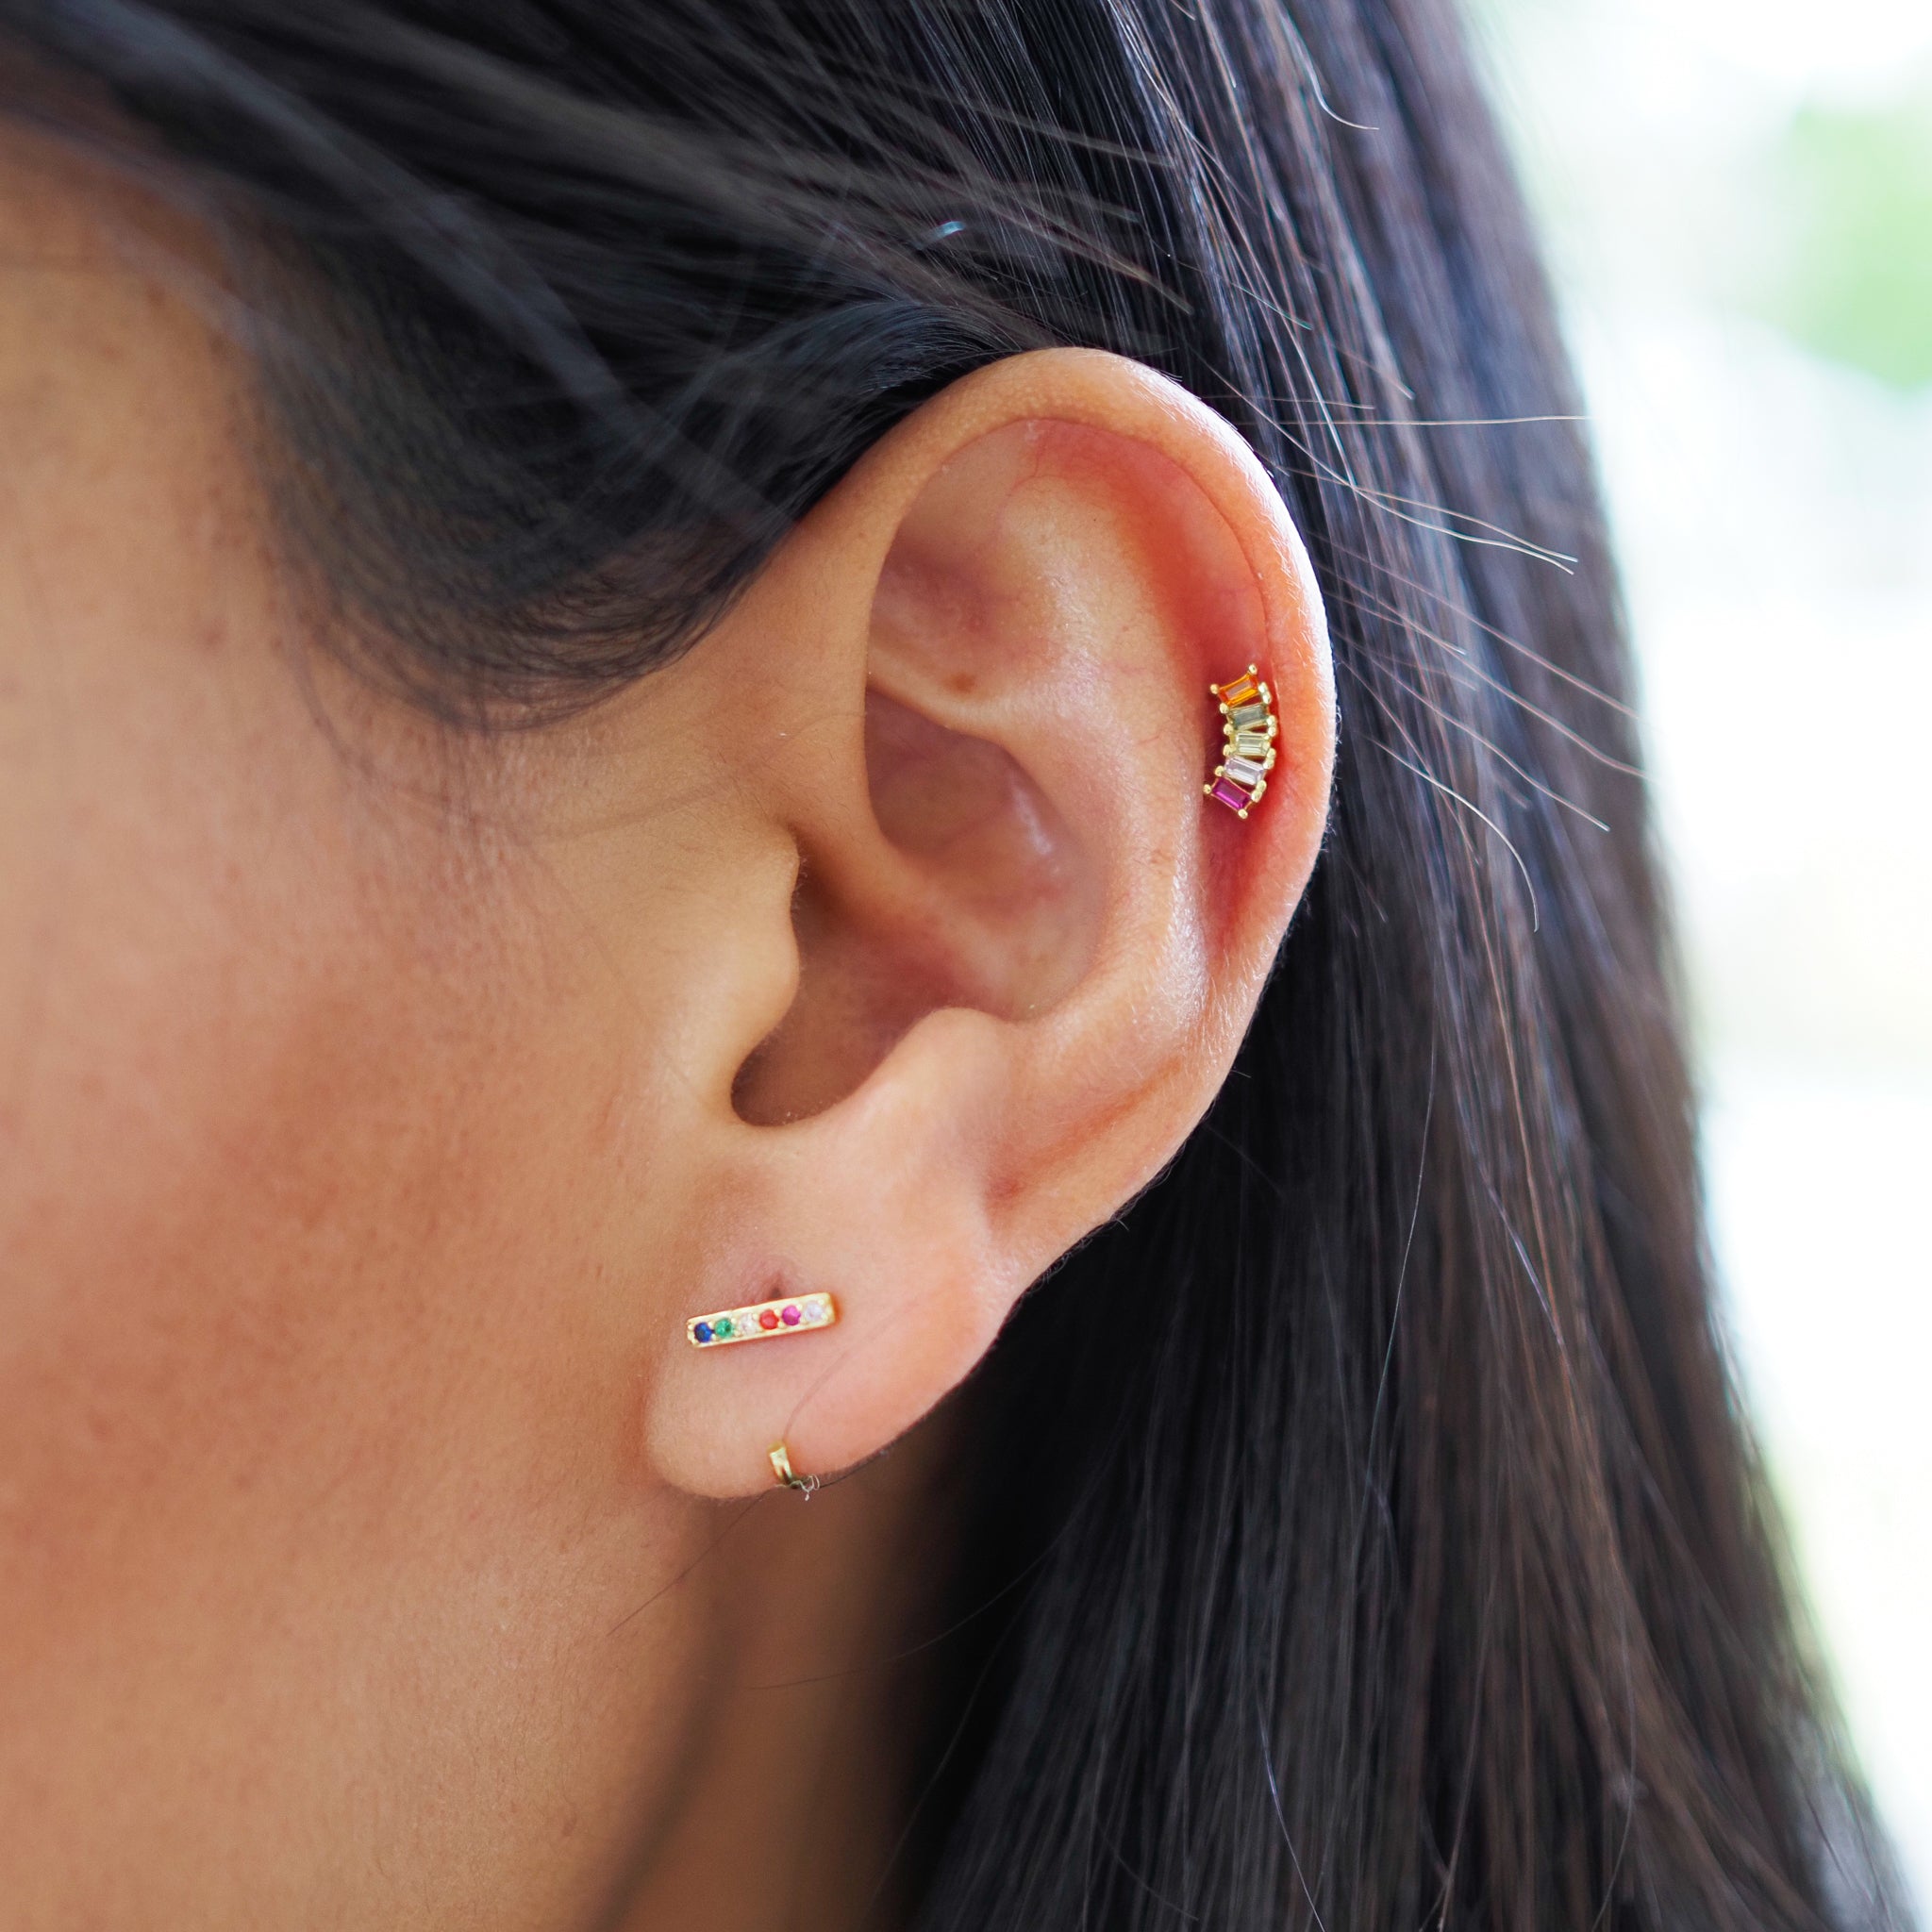 Rainbow curve stud earrings pride jewelry, model